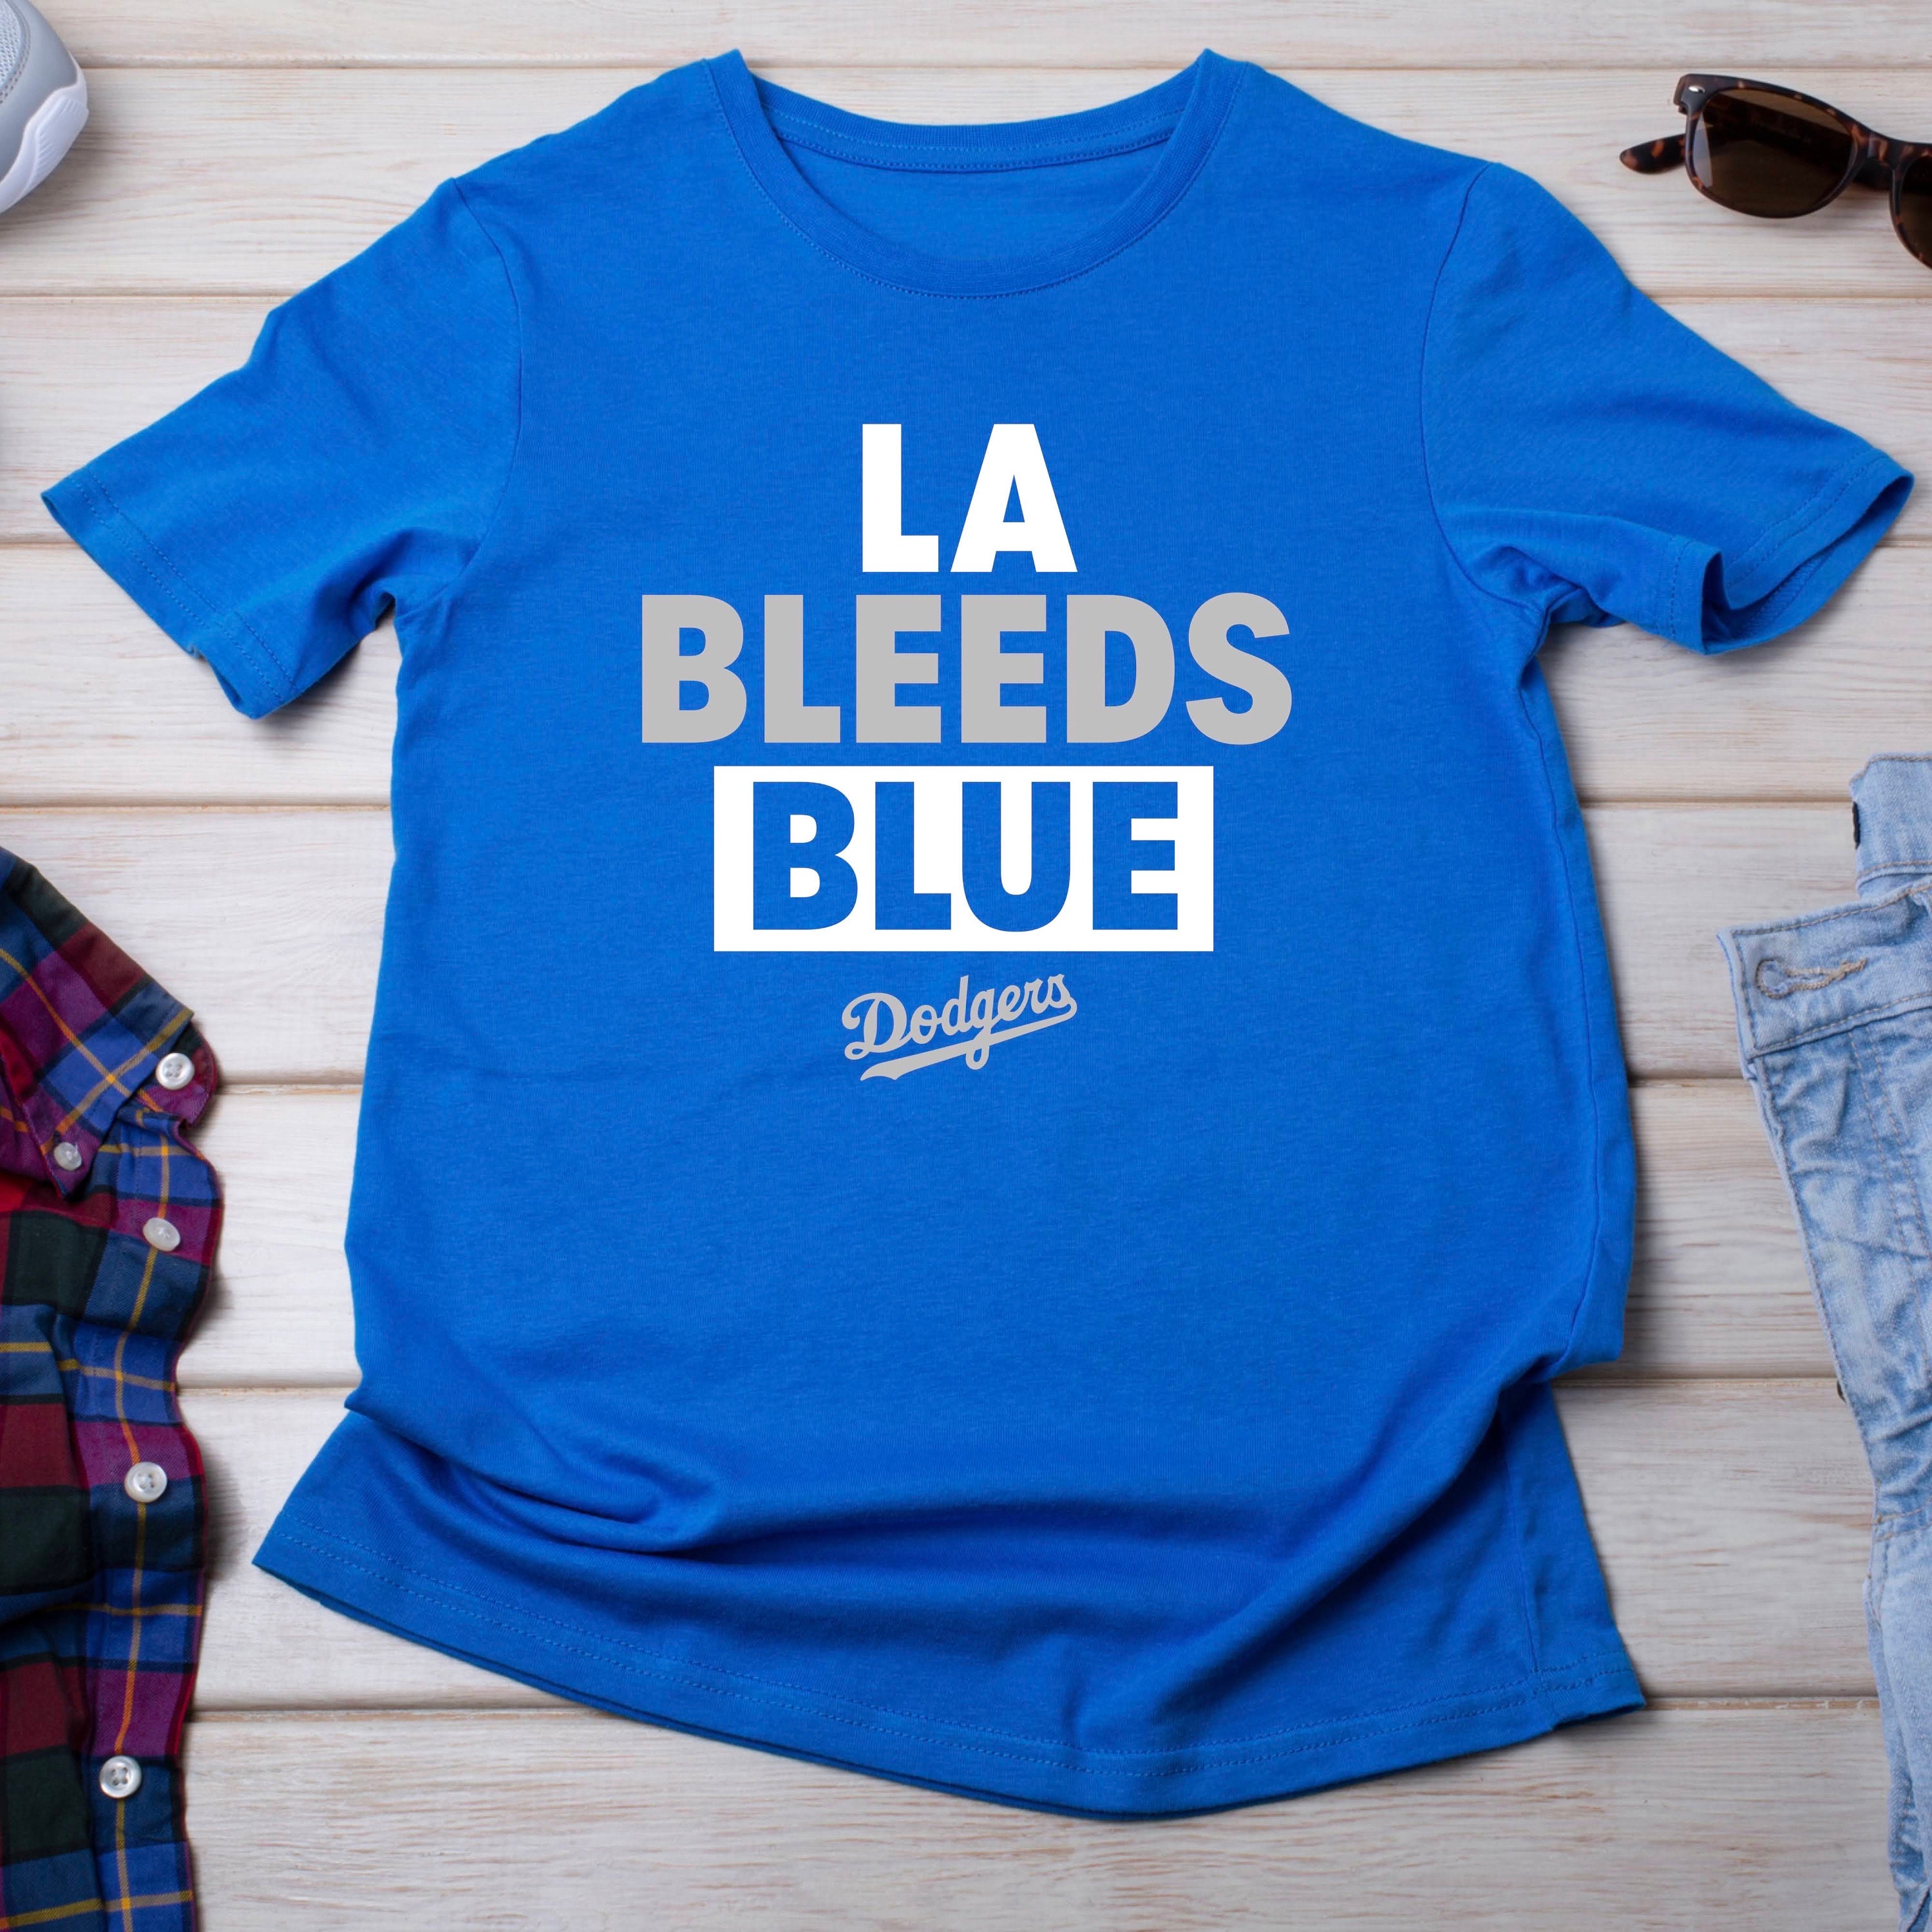 vtg 80s LA DODGERS MLB KOALA COCA COLA BLUE CREW t-shirt BASEBALL YOUTH  SMALL S